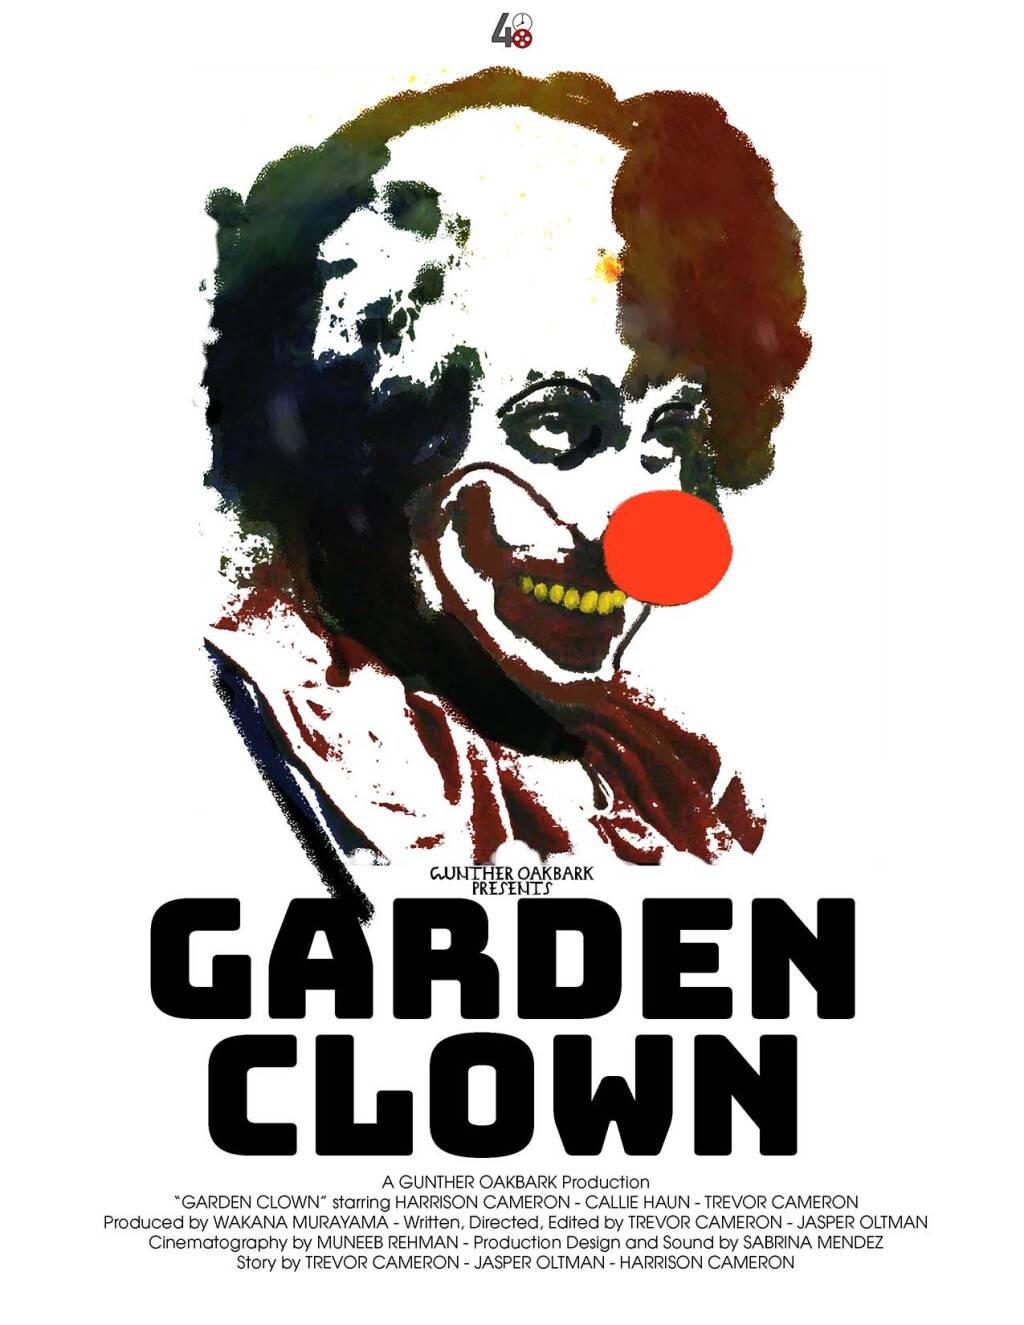 Filmposter for Garden Clown